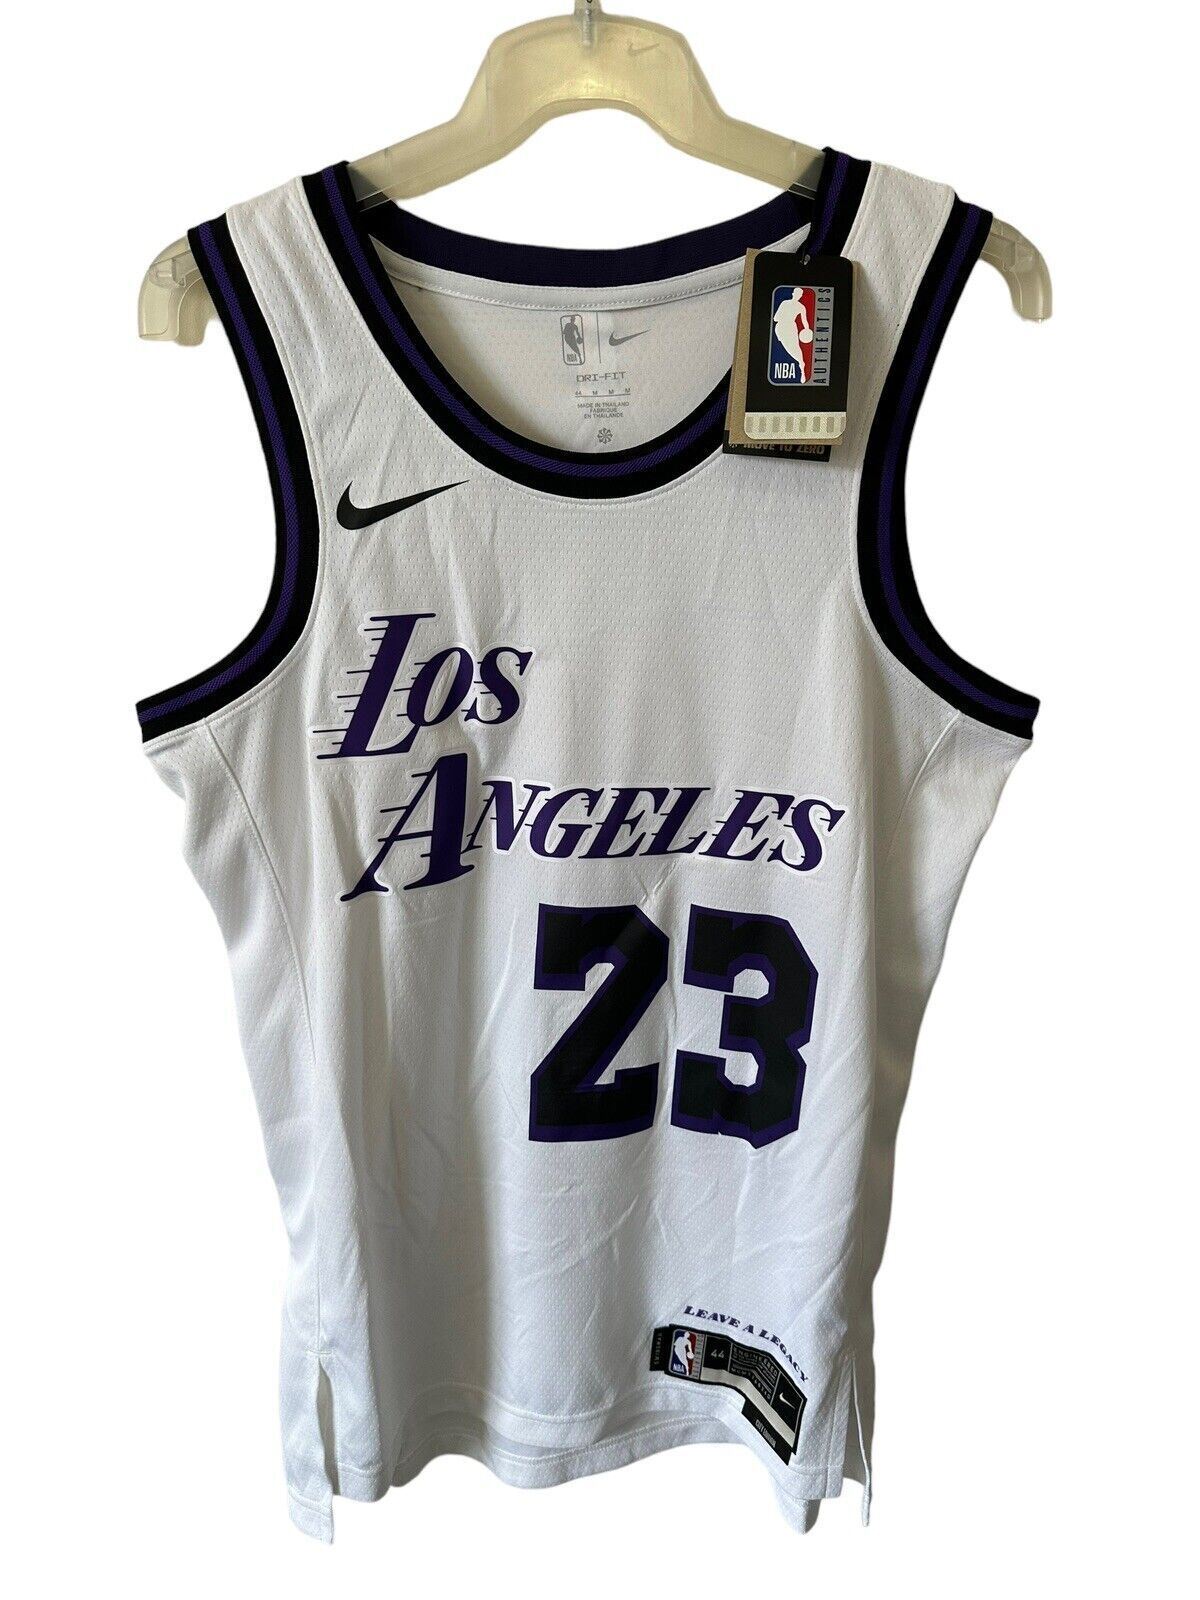 Nike NBA LA Lakers City Edition Jersey XYLOURIS 23 Basketball Men’s Medium